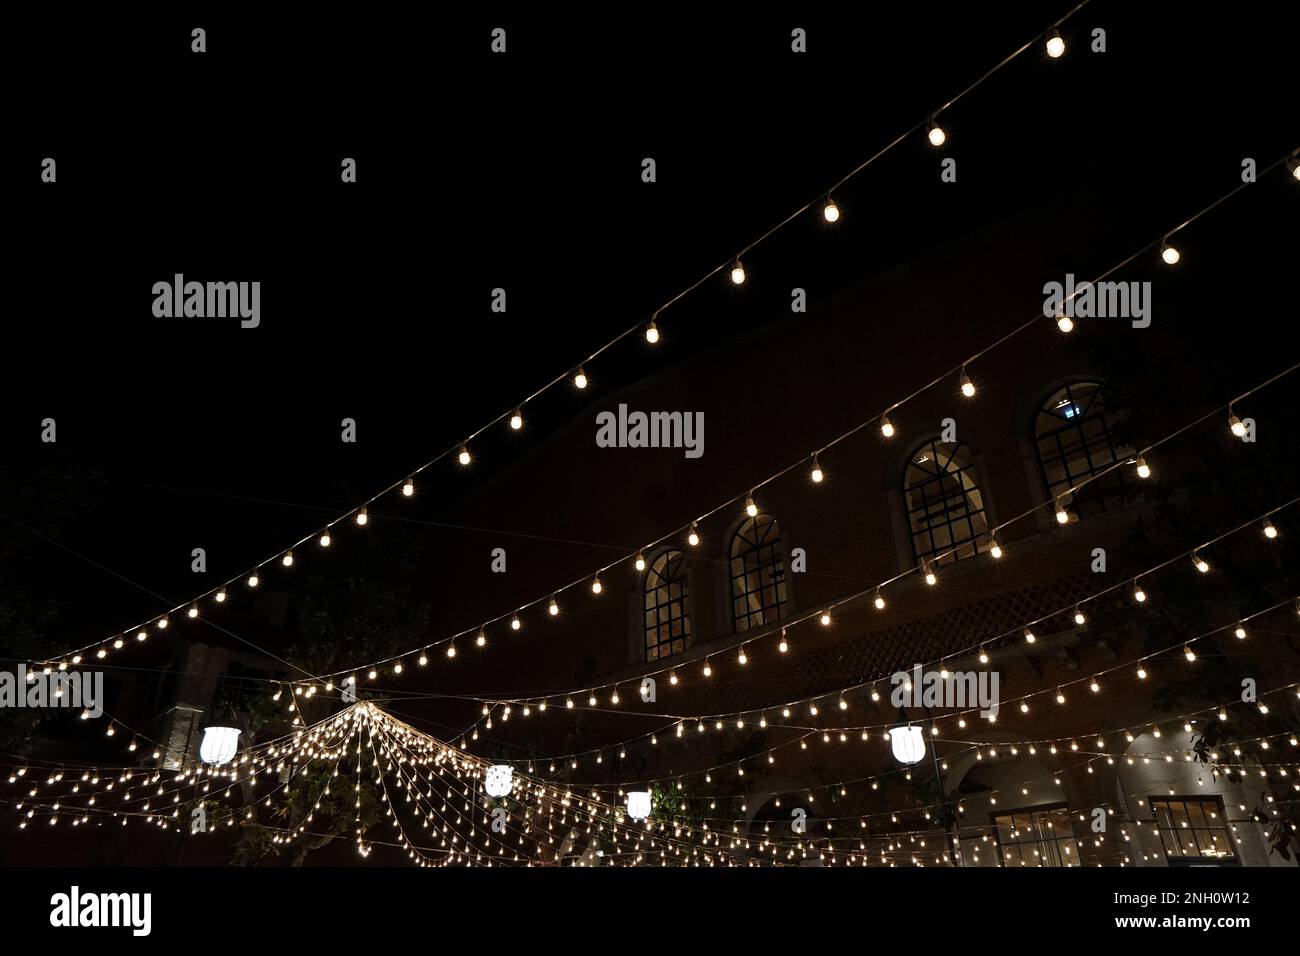 Decoration and design of night lighting Stock Photo